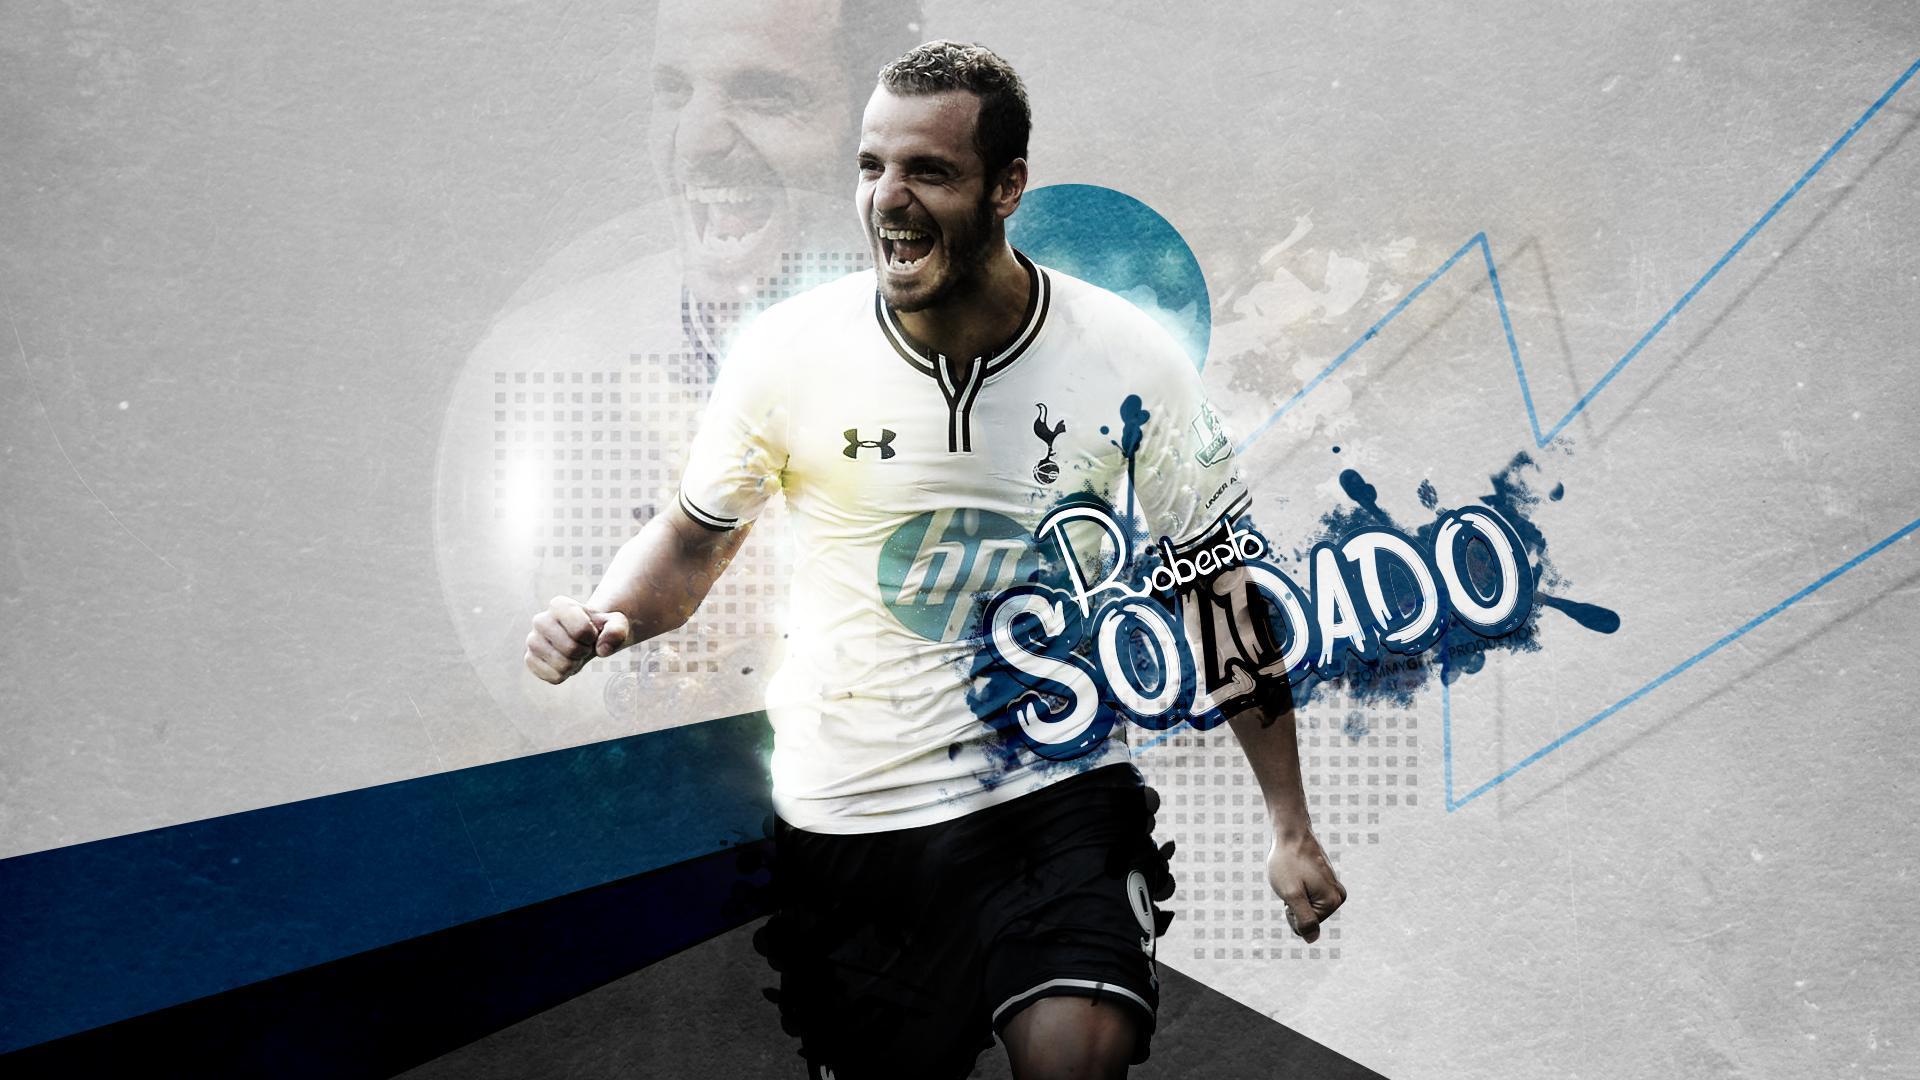 HD wallpaper, Roberto Soldado Hd, Tottenham Hotspur F